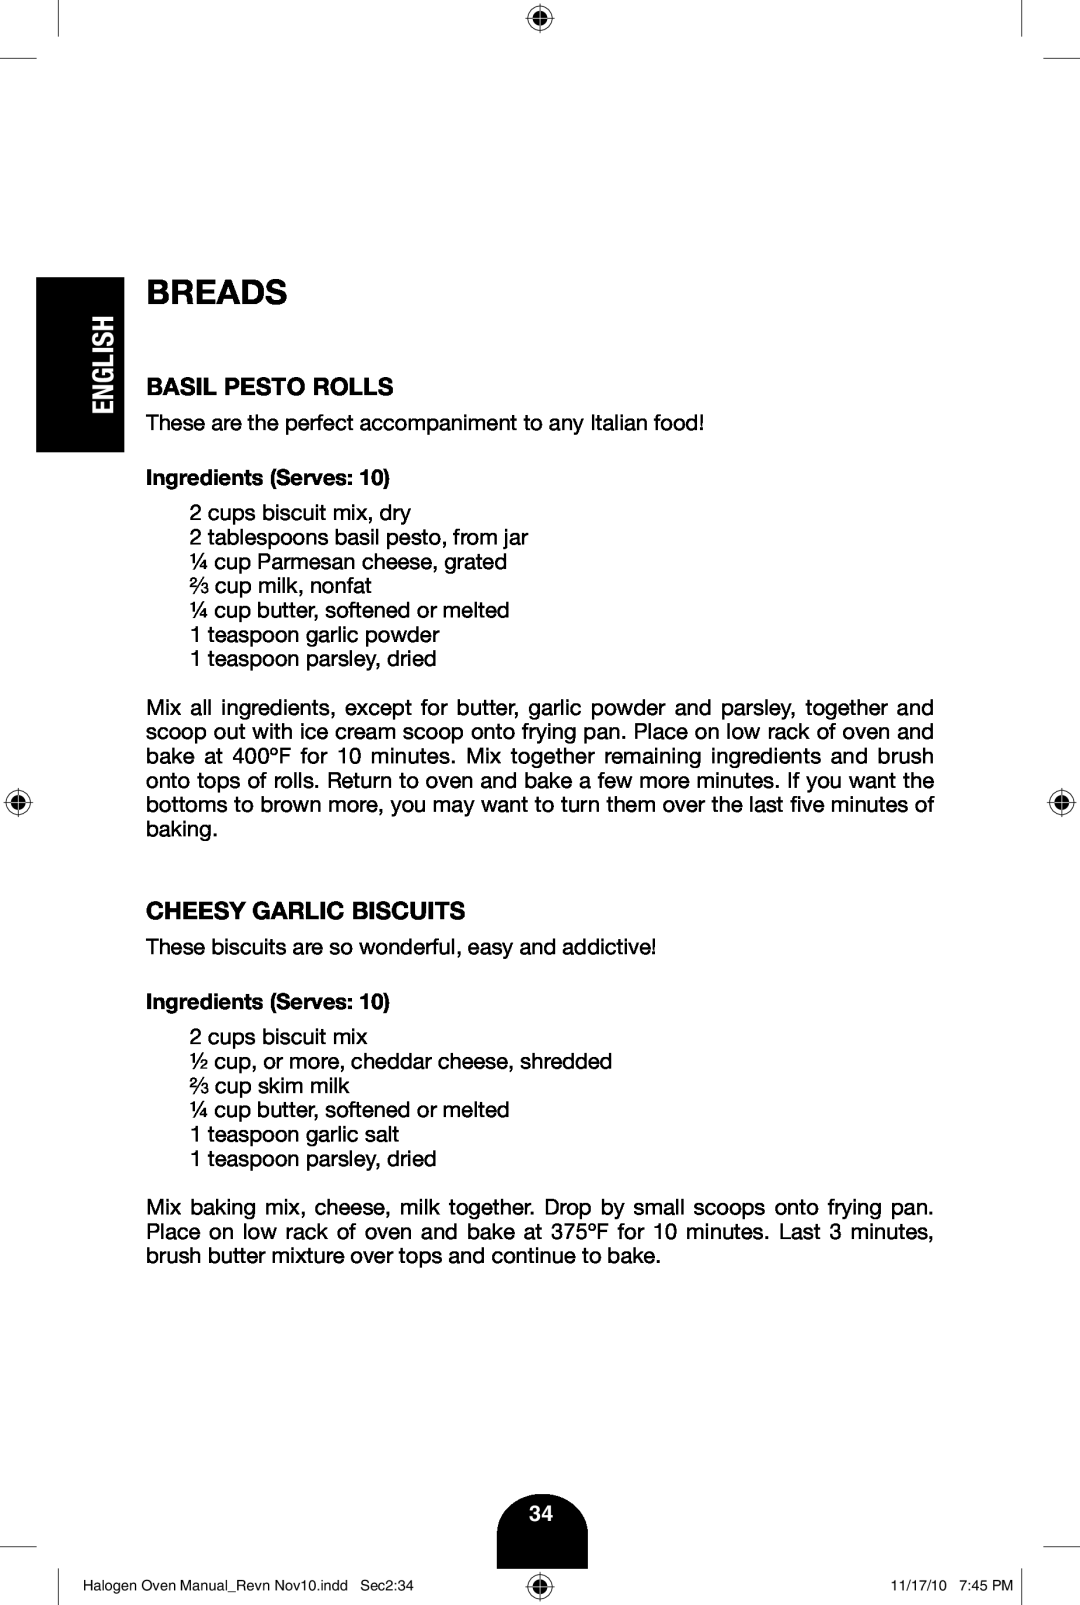 Fagor America 670040380 user manual Breads, Basil Pesto Rolls, Cheesy Garlic Biscuits, English 